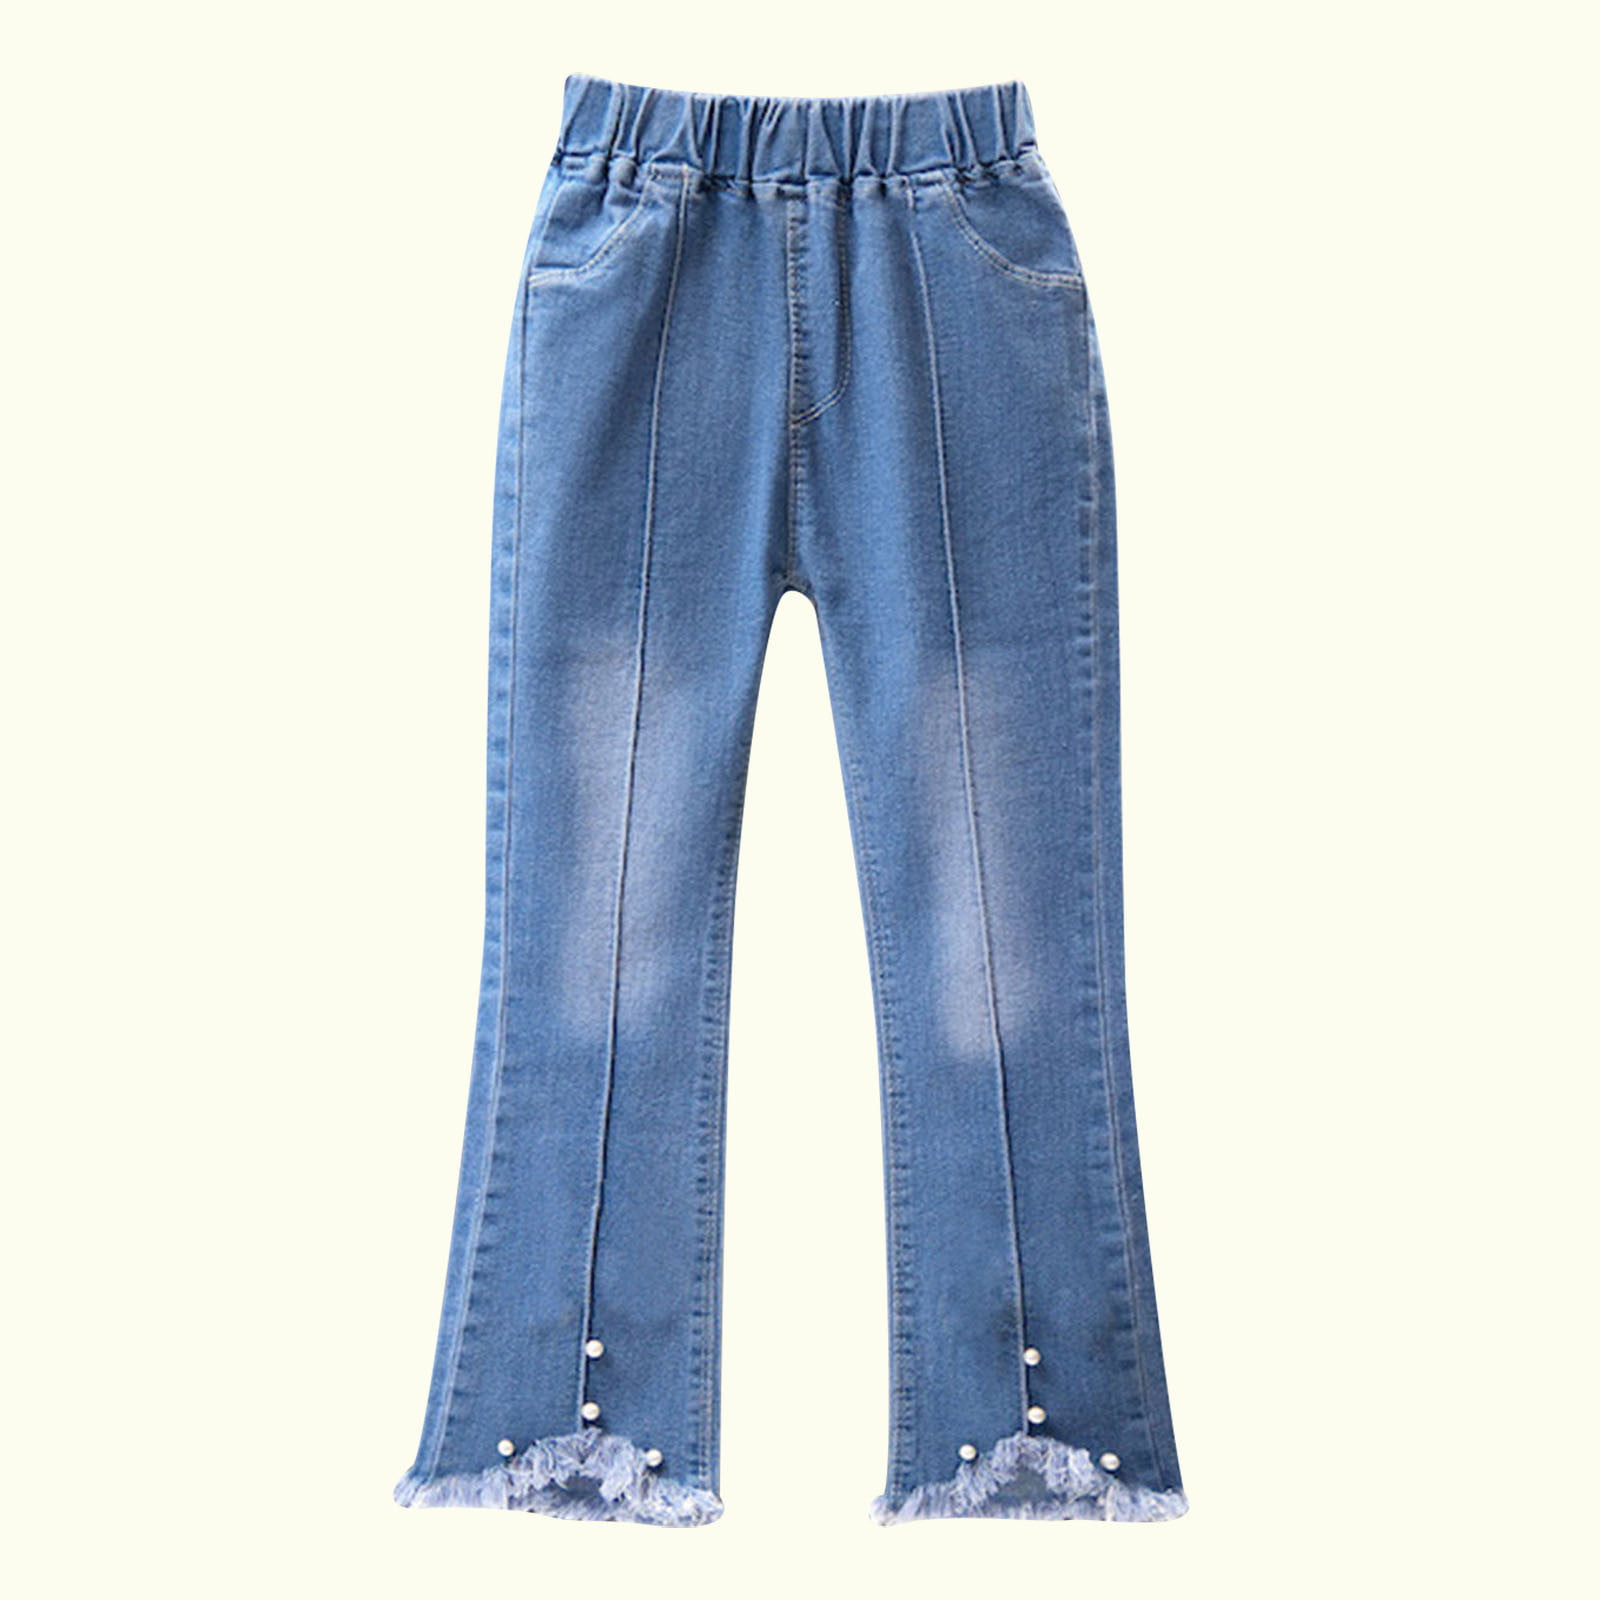 Honeeladyy Toddler Kids Baby Girls Fashion Cute Sweet Boe Flared Pants  Trousers Jeans Pants kids jeans for girls 4-16